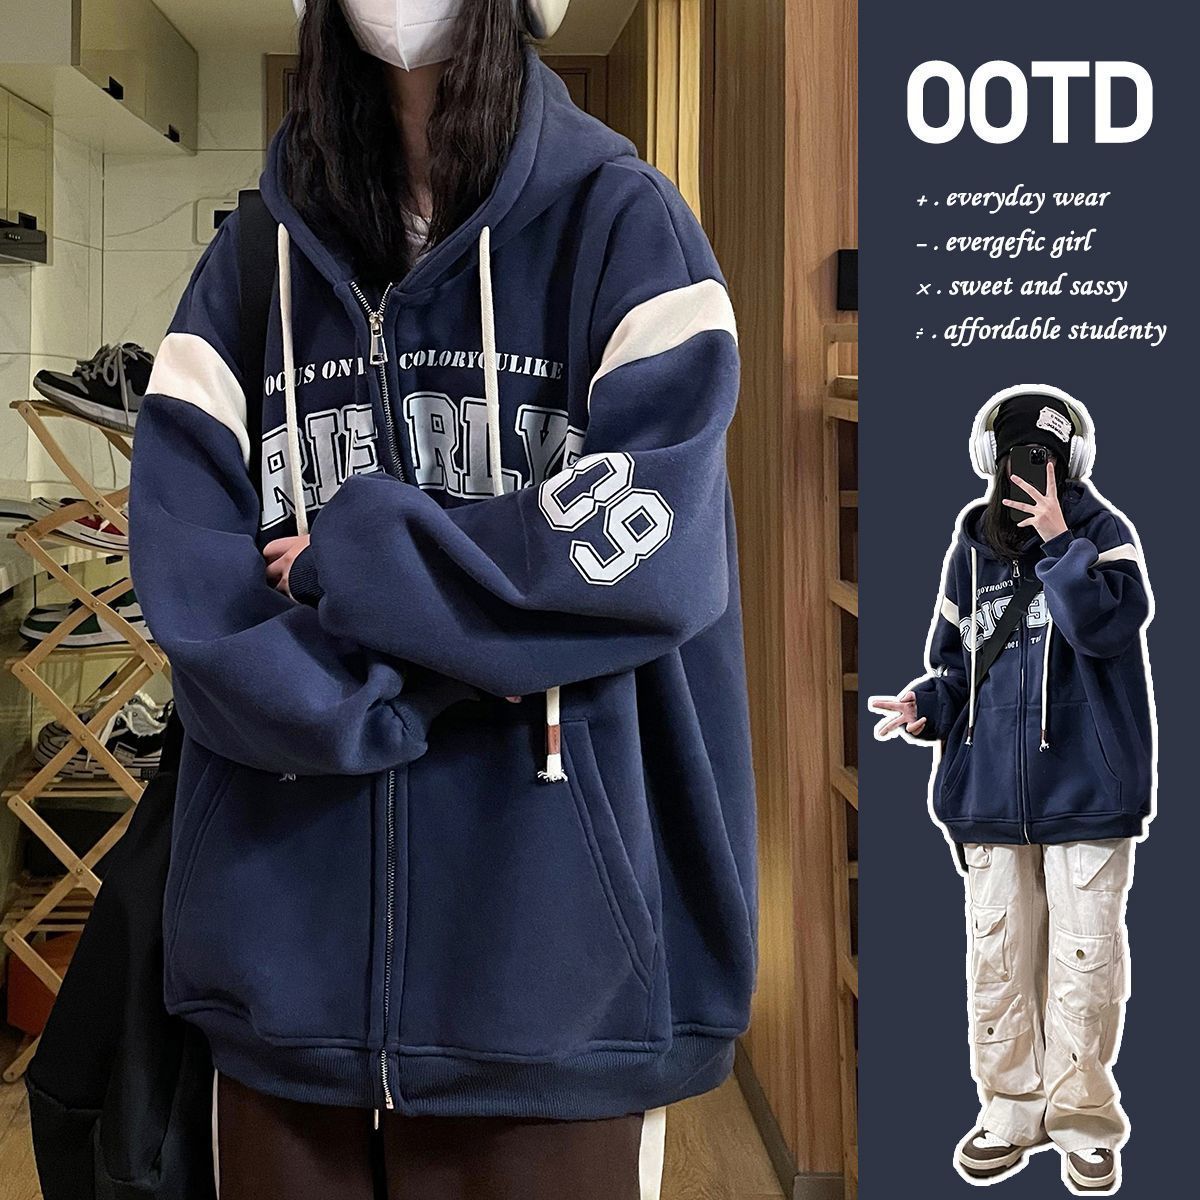 Retro Hong Kong style chic jacket for women spring 2023 new loose hooded baseball uniform top sports cardigan sweatshirt